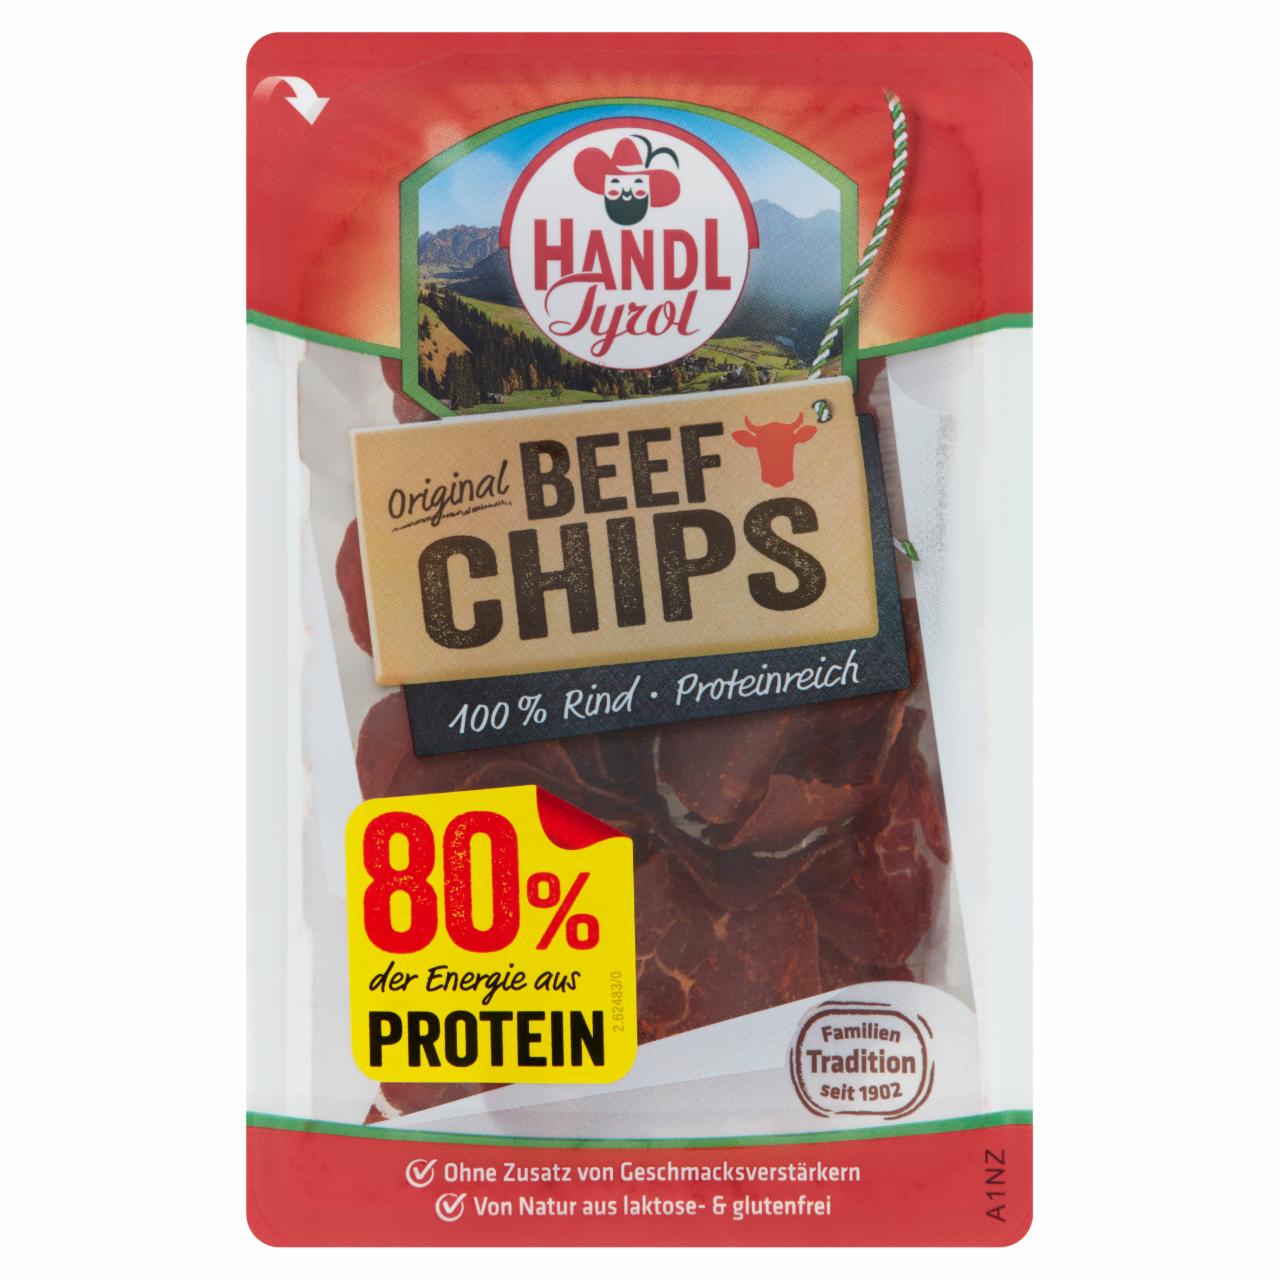 Képek - Handl Tyrol Beef chips 30 g